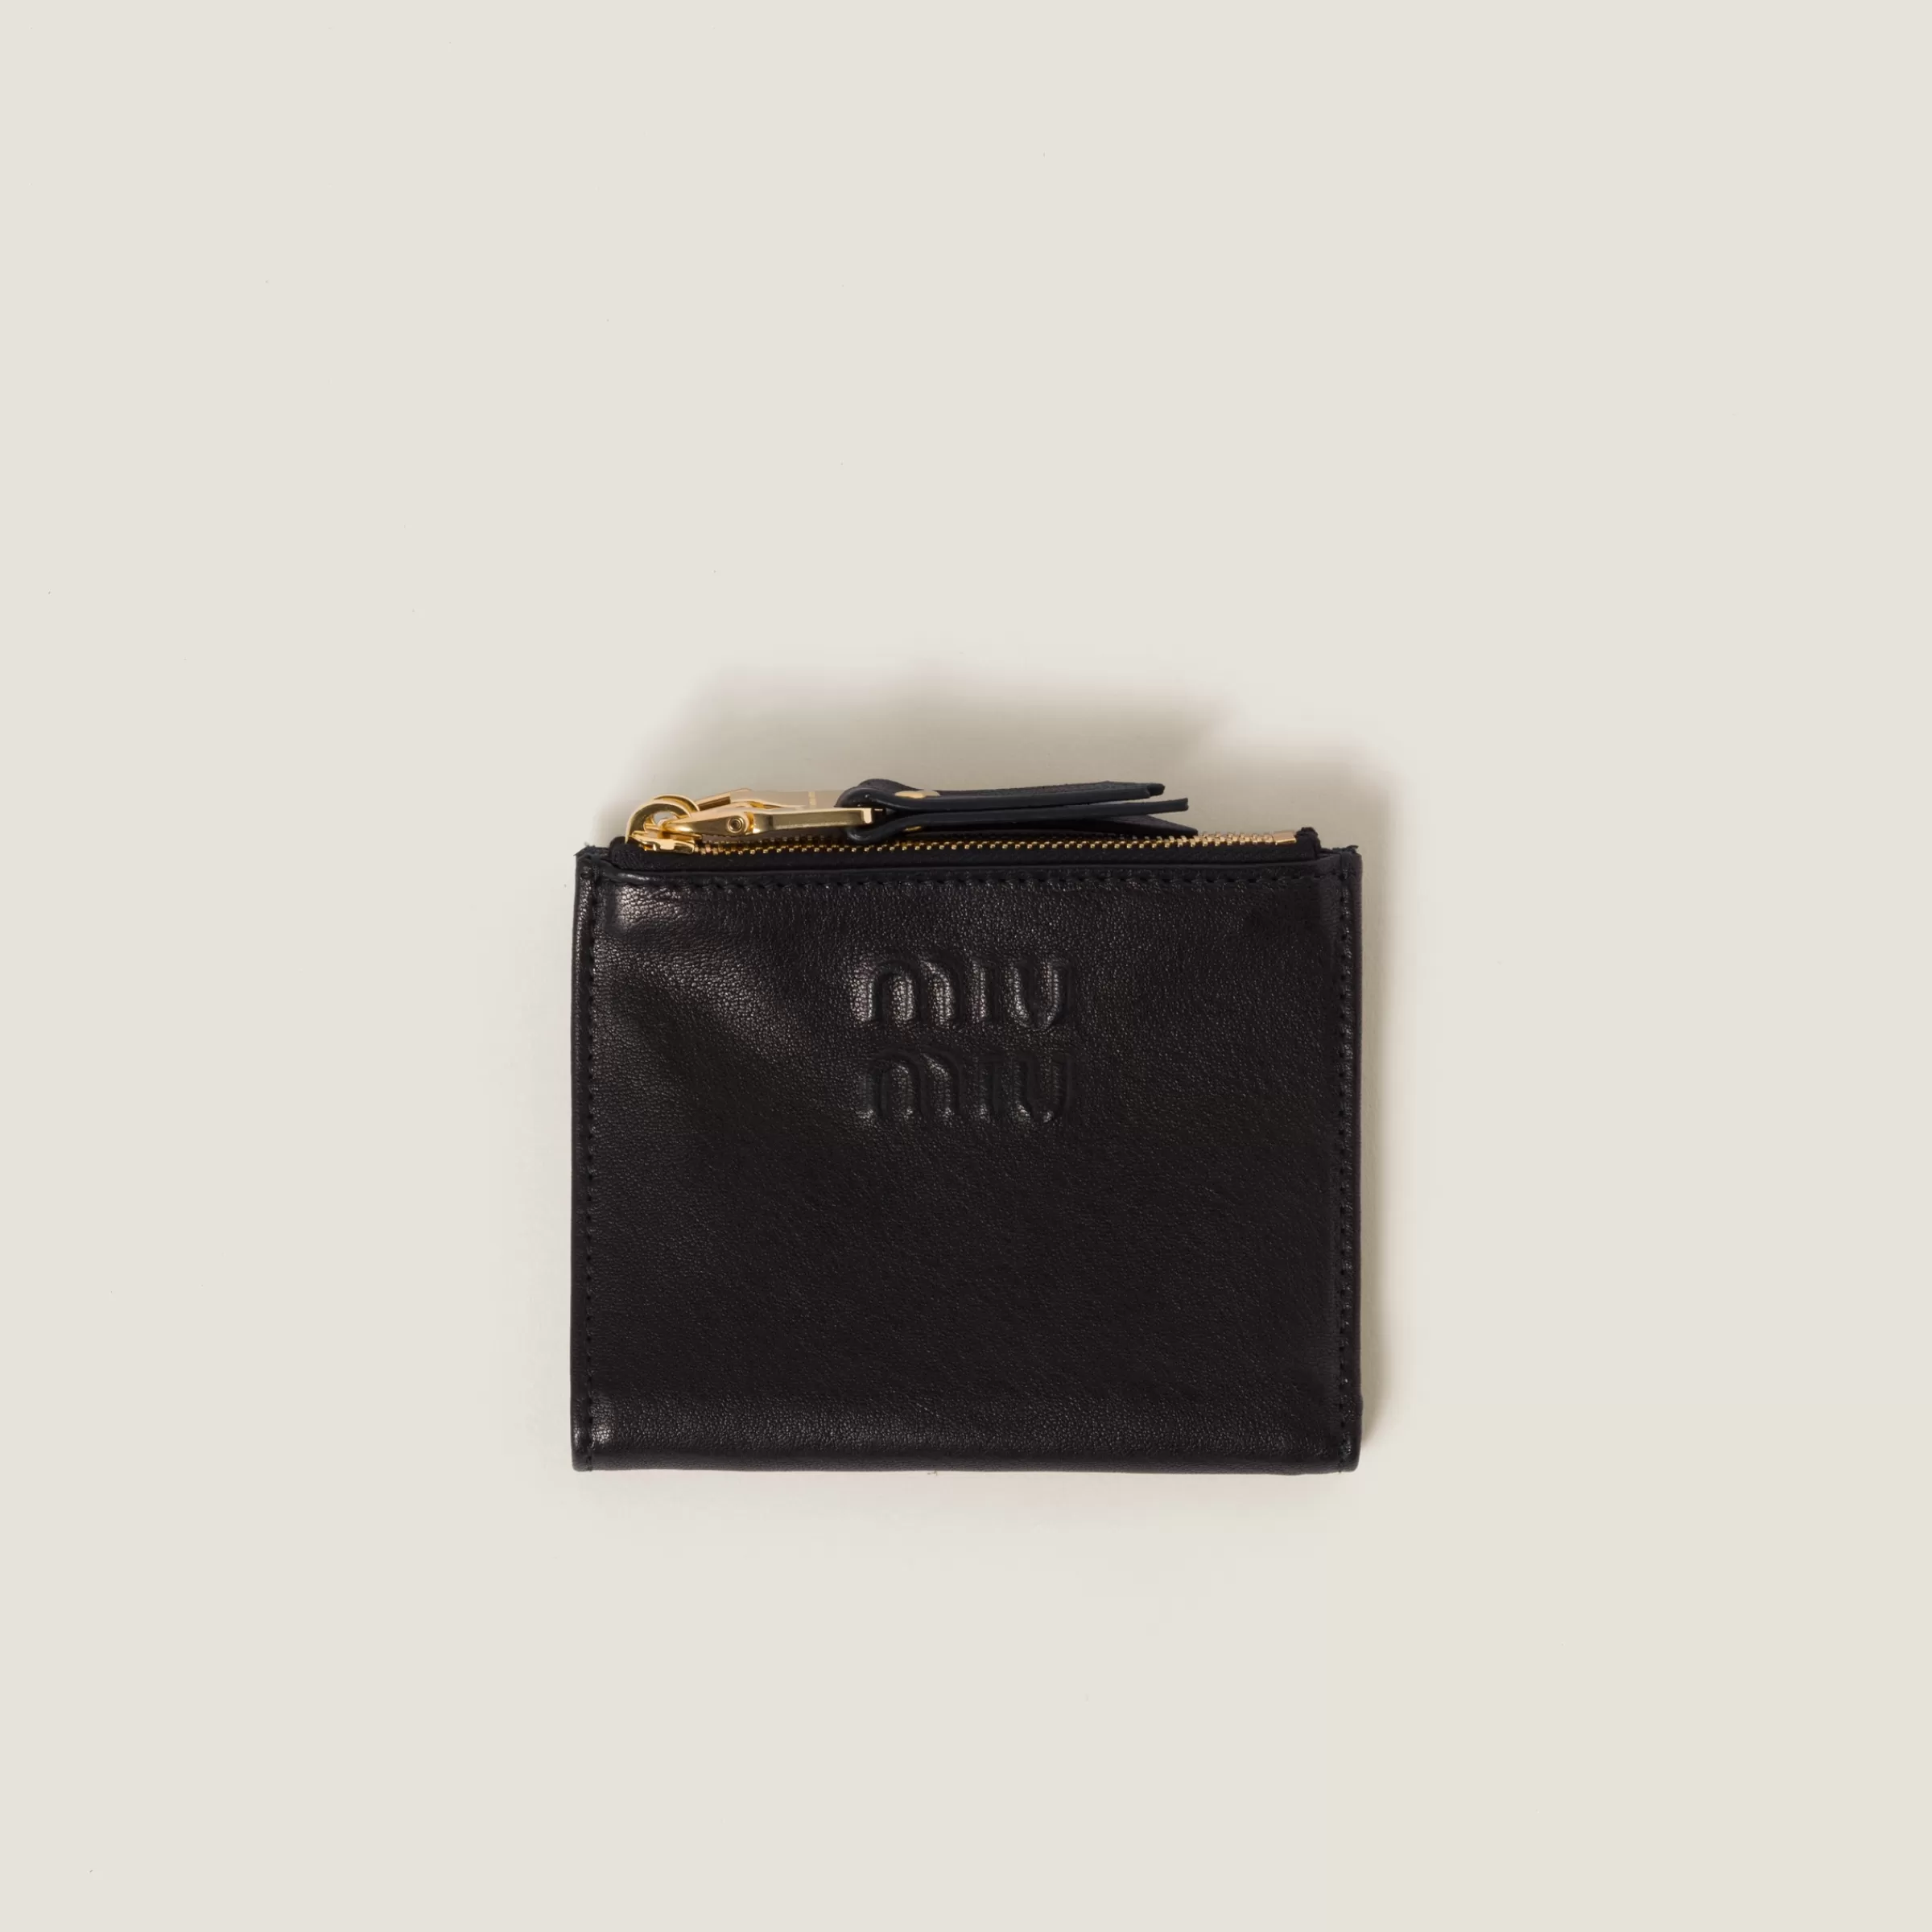 Miu Miu Small Nappa Leather Wallet |